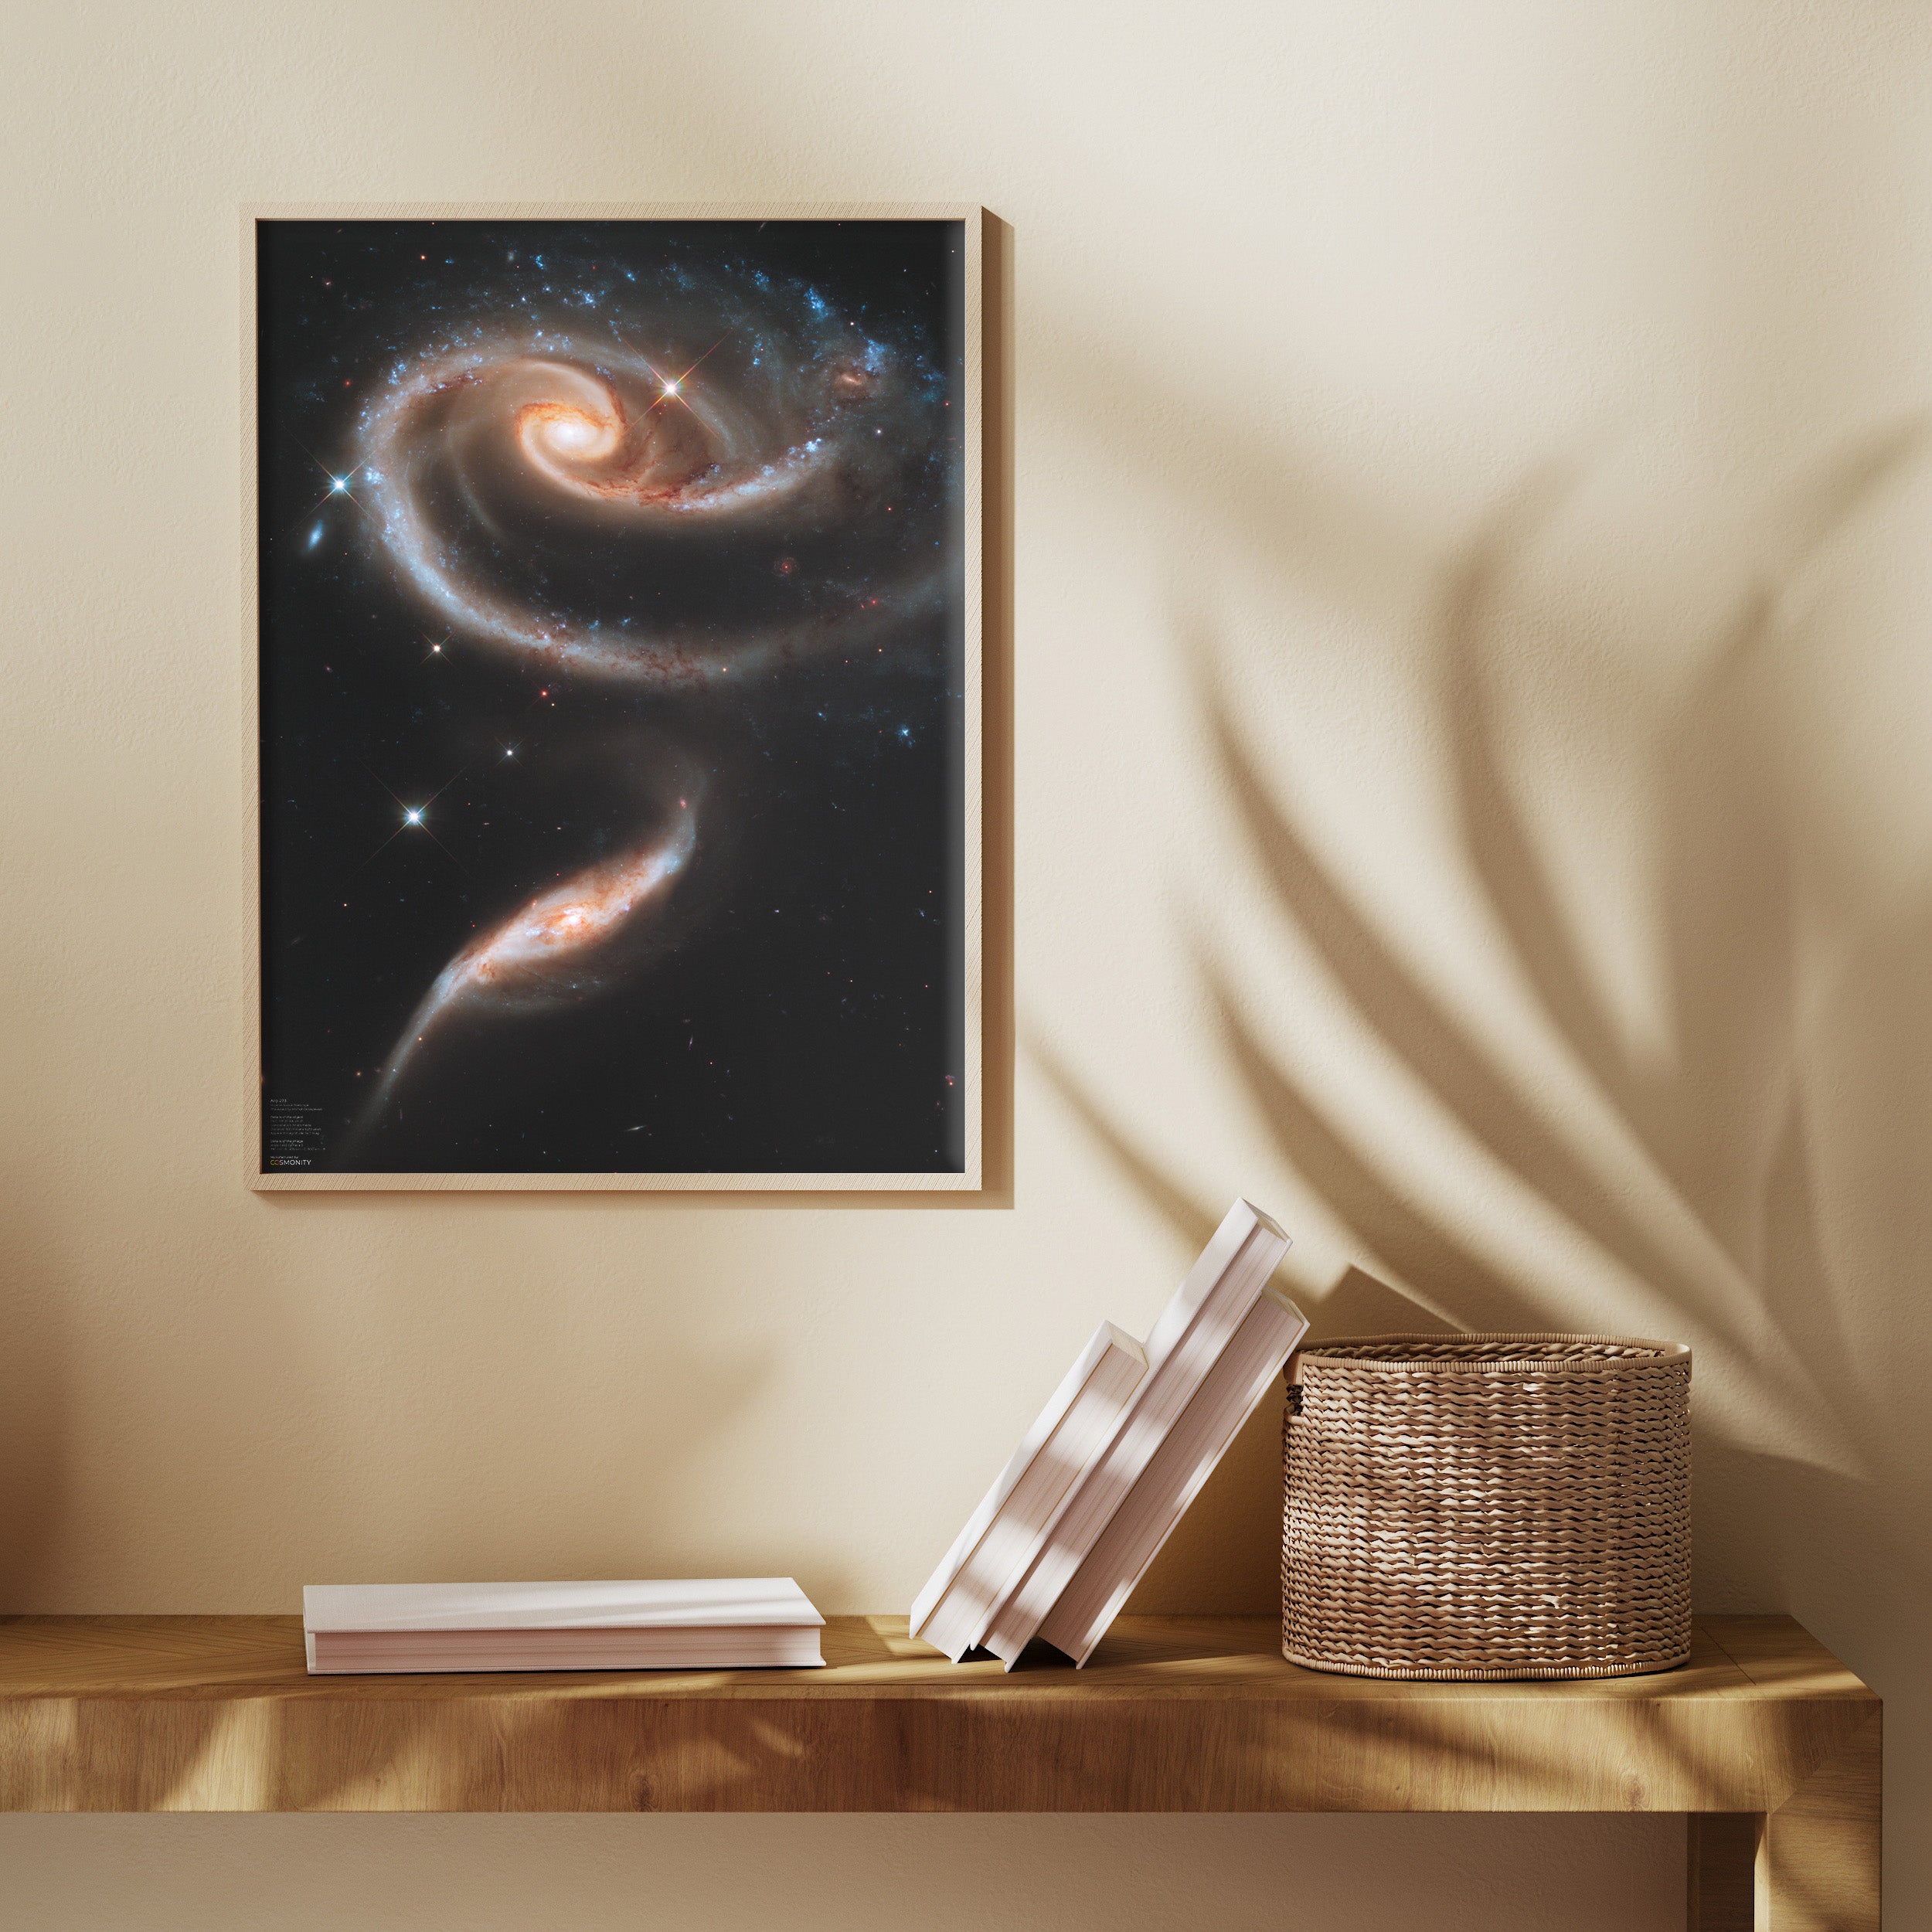 Peculiar Galaxies - Arp 273